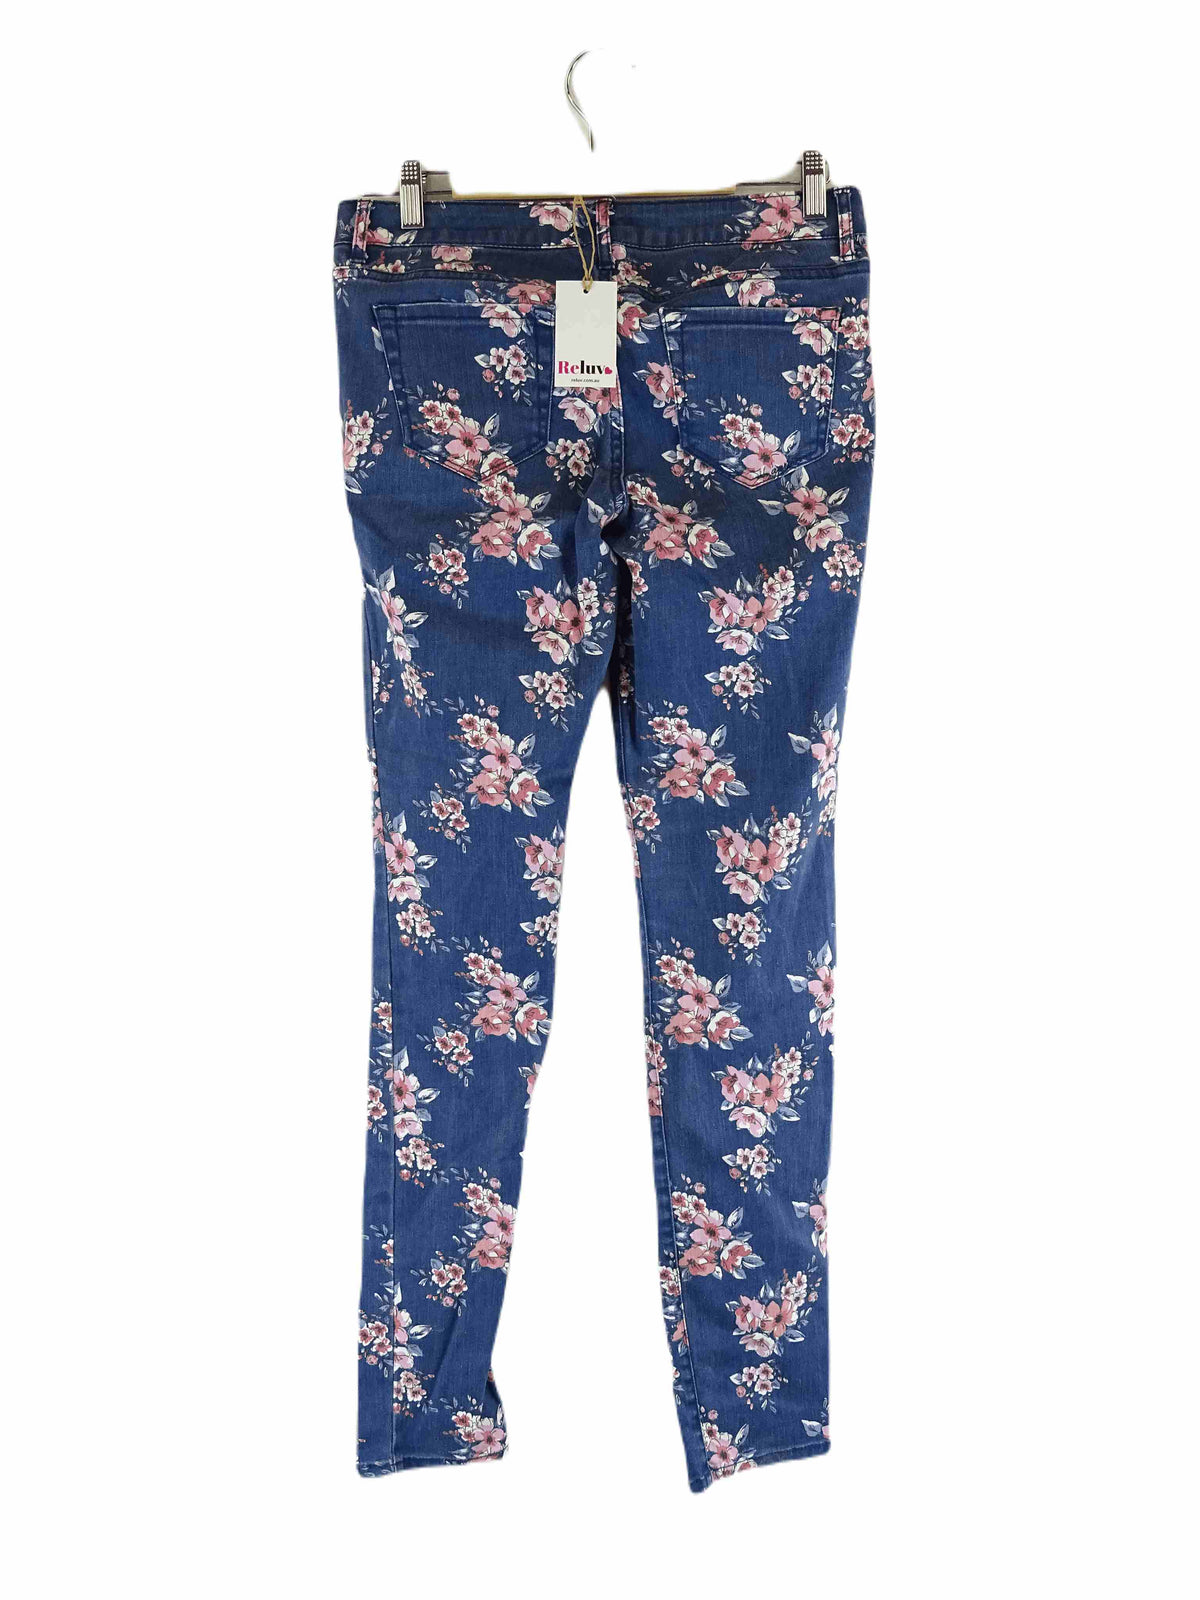 Aeropostale Blue Floral Pants 12